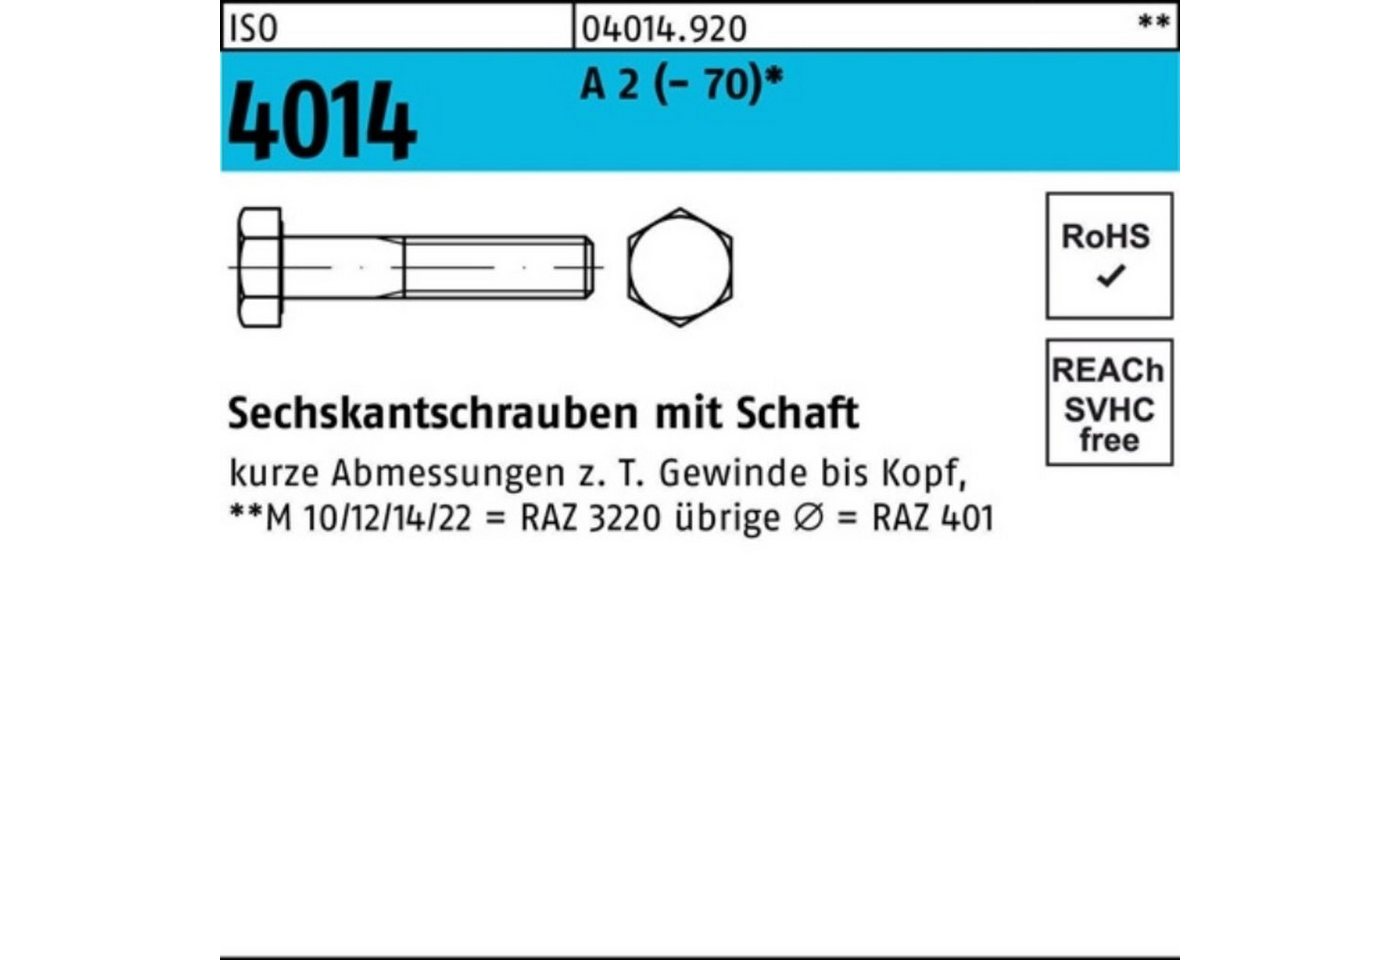 Bufab Sechskantschraube 100er Pack Sechskantschraube ISO 4014 Schaft M8x 80 A 2 (70) 100 St von Bufab